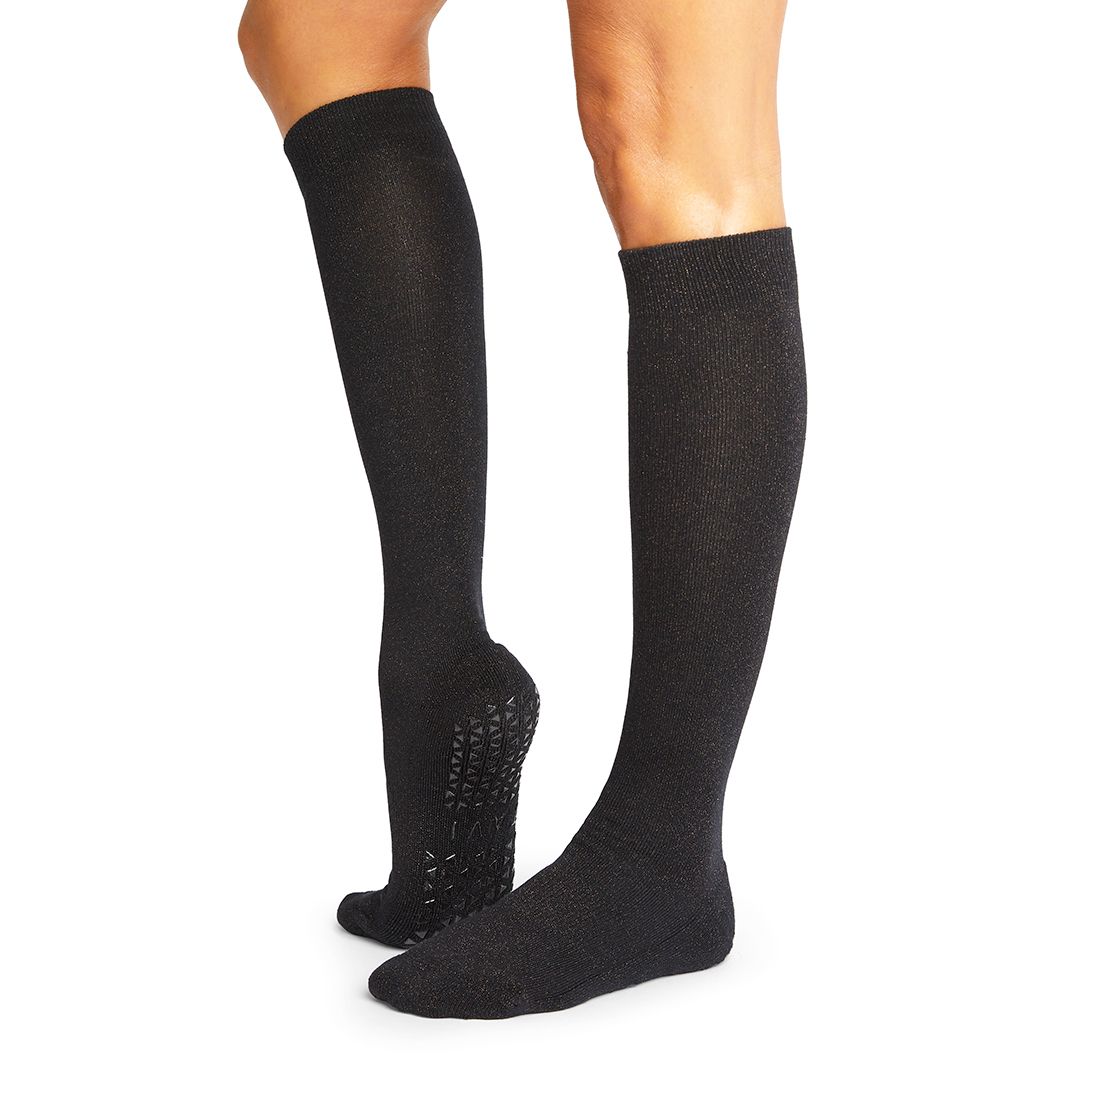 Lagree YYC - Tavi Noir grip socks are now available at